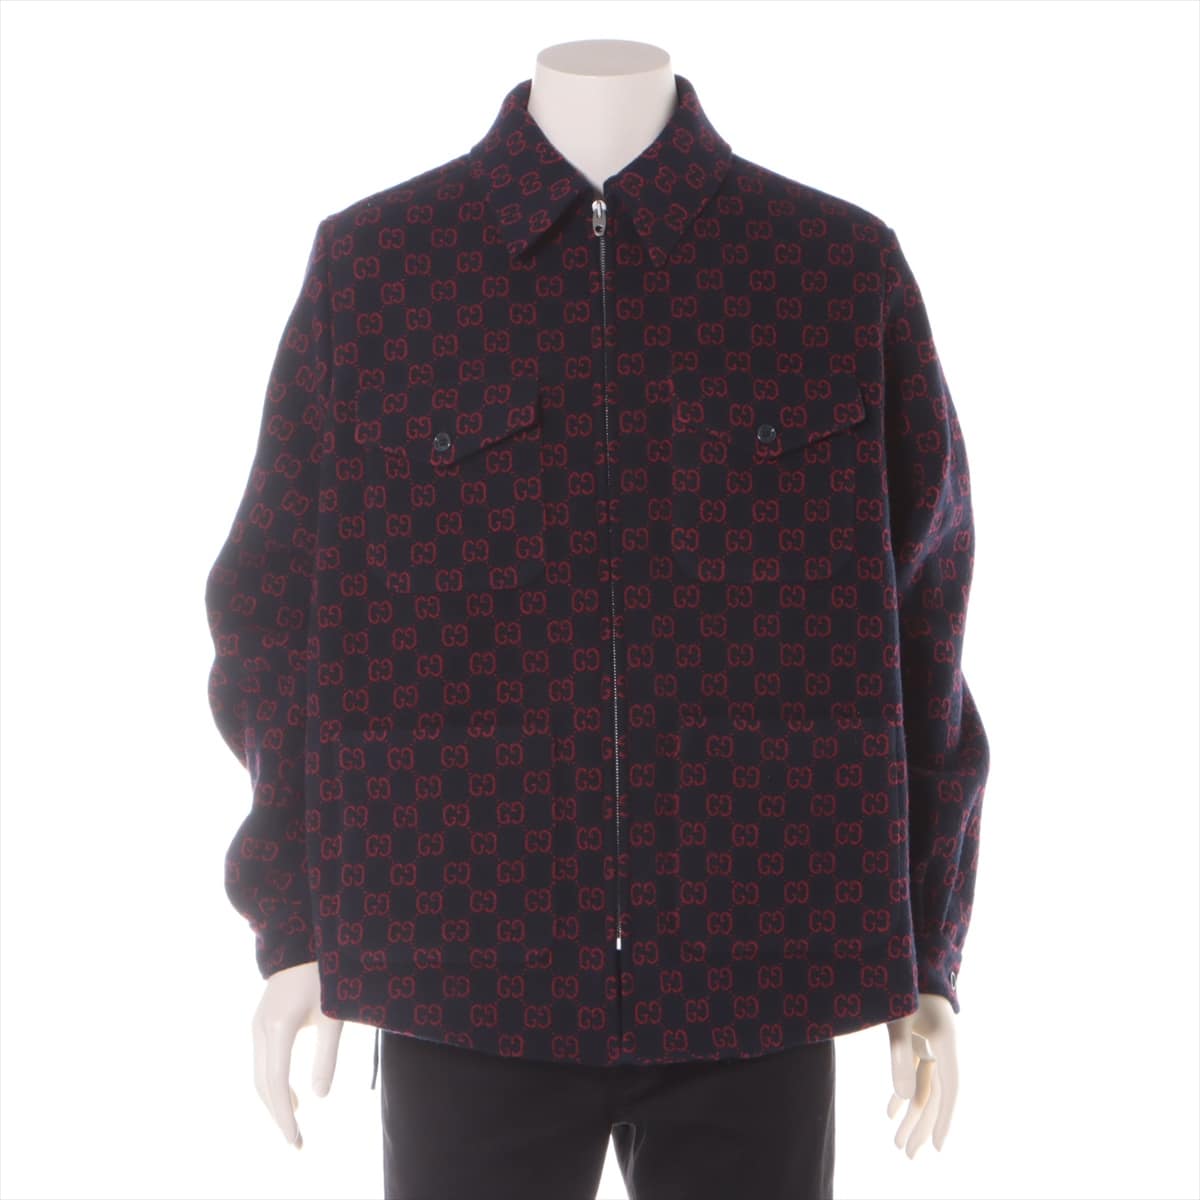 Gucci Wool & Nylon Knit jacket 44 Men's Navy x red  638807 GG wool